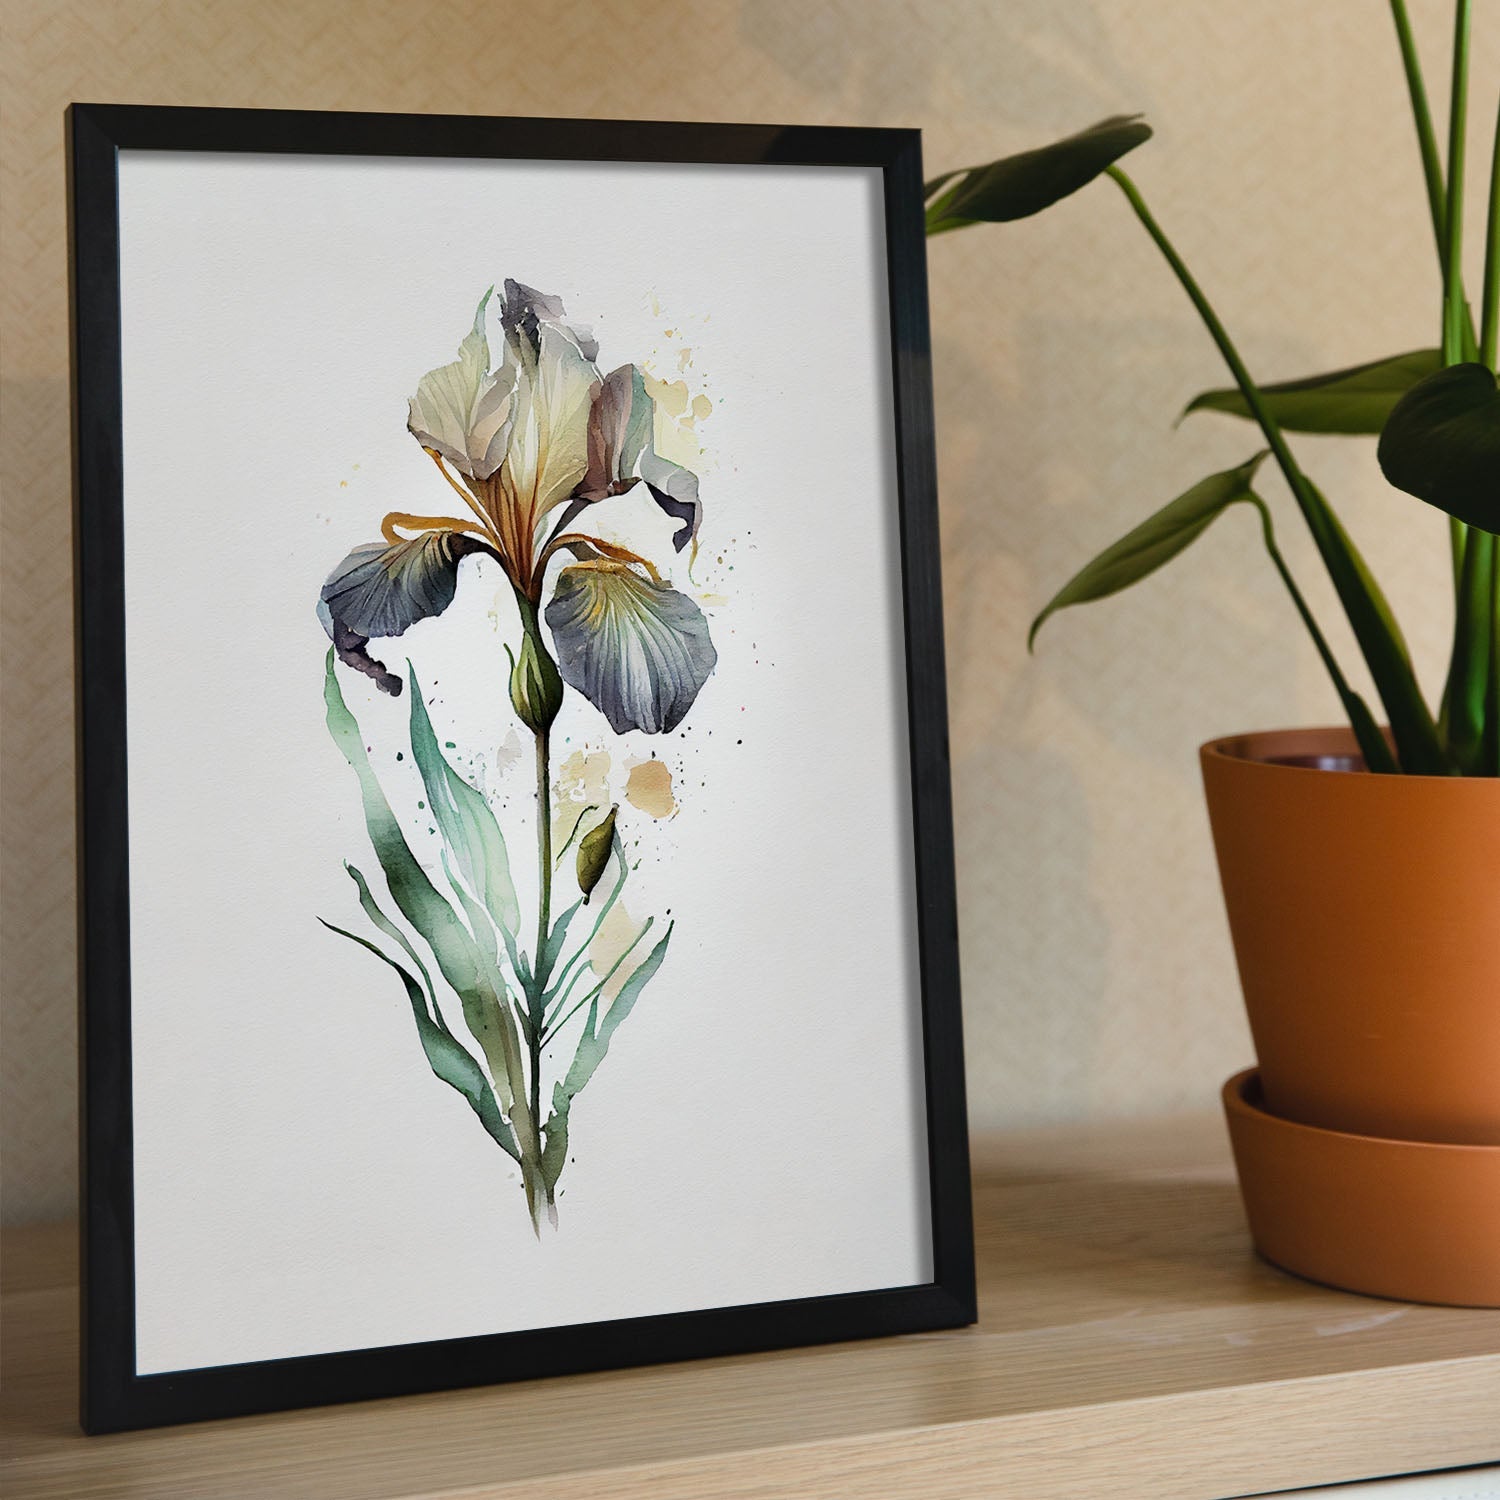 Nacnic watercolor minmal Iris. Aesthetic Wall Art Prints for Bedroom or Living Room Design.-Artwork-Nacnic-A4-Sin Marco-Nacnic Estudio SL